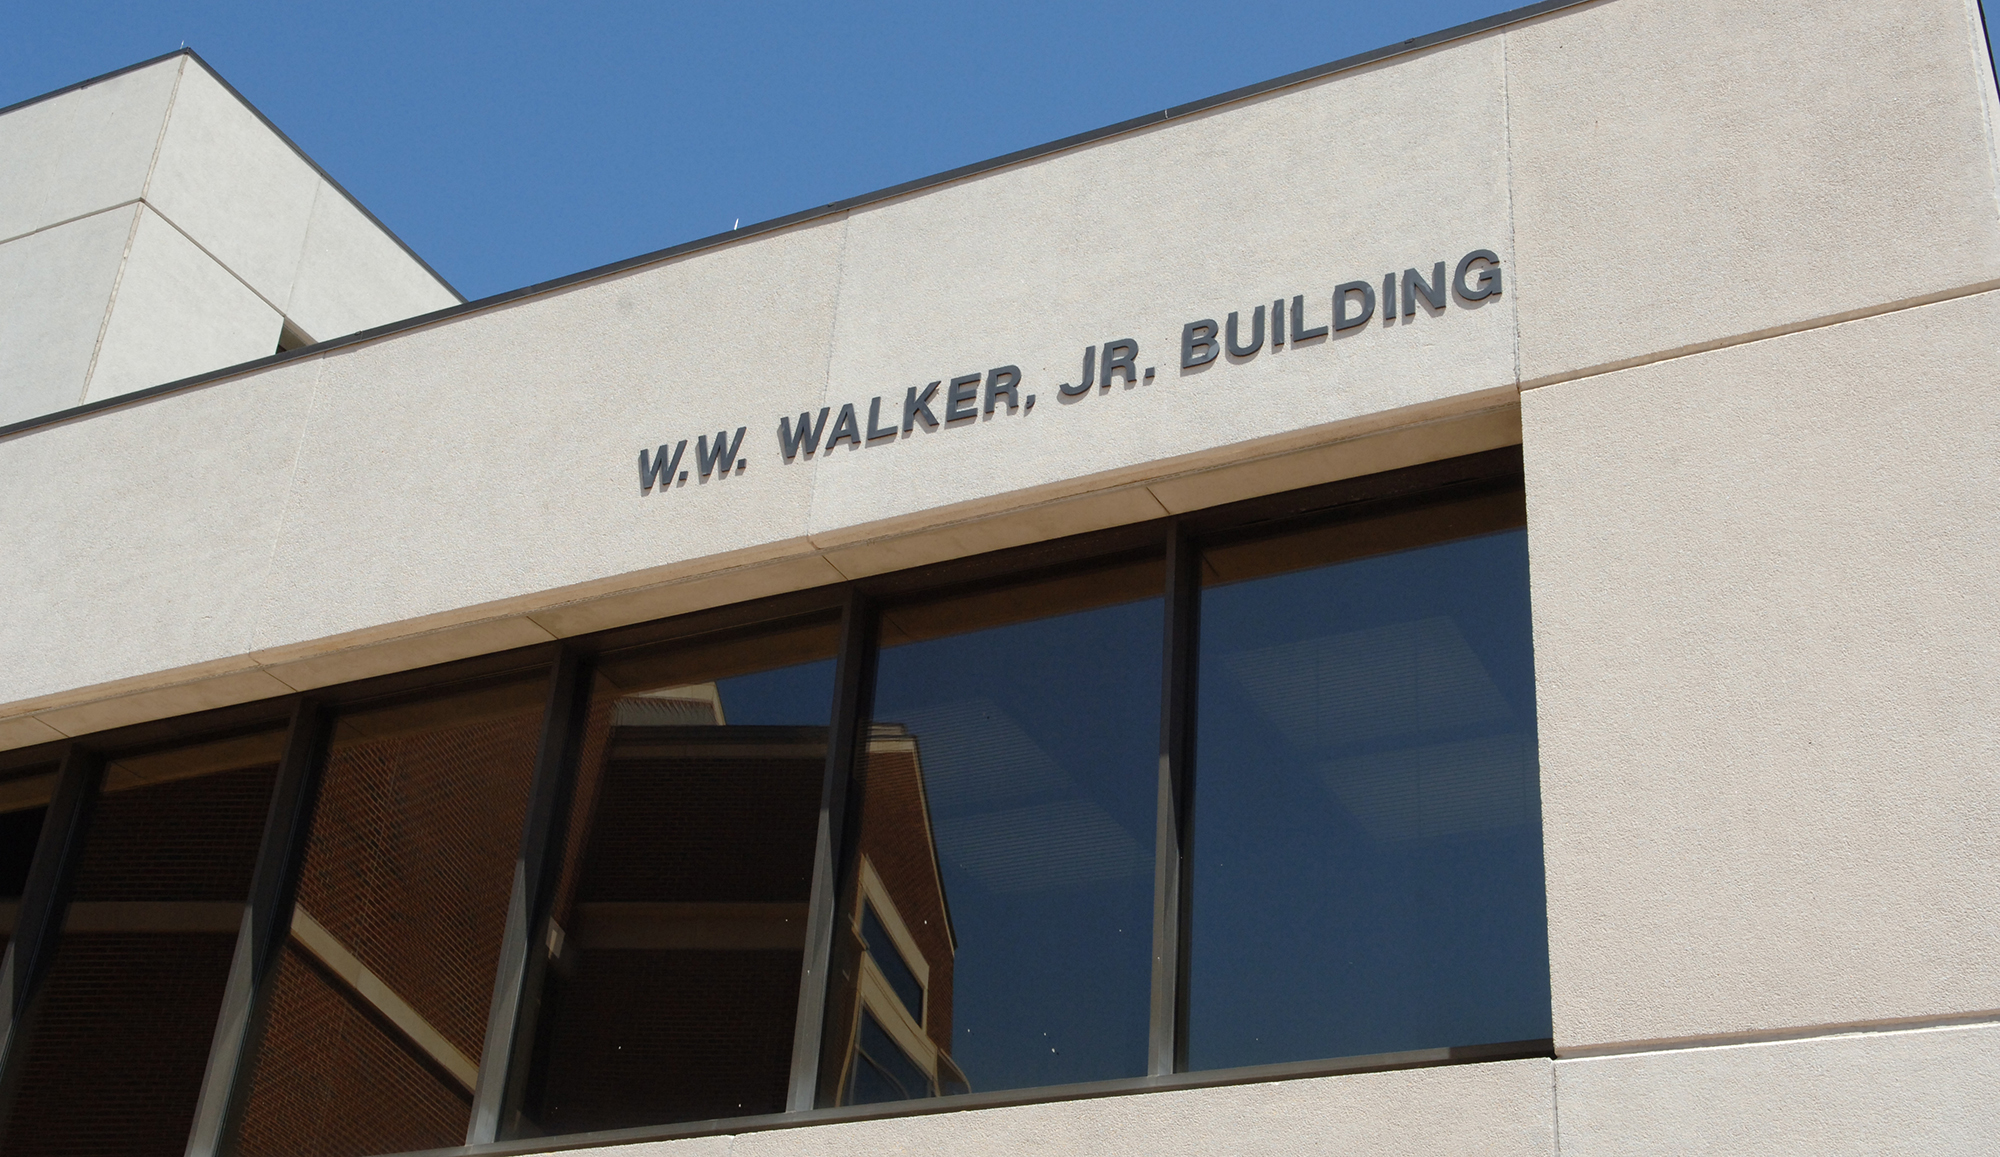 Exterior of the Walker building